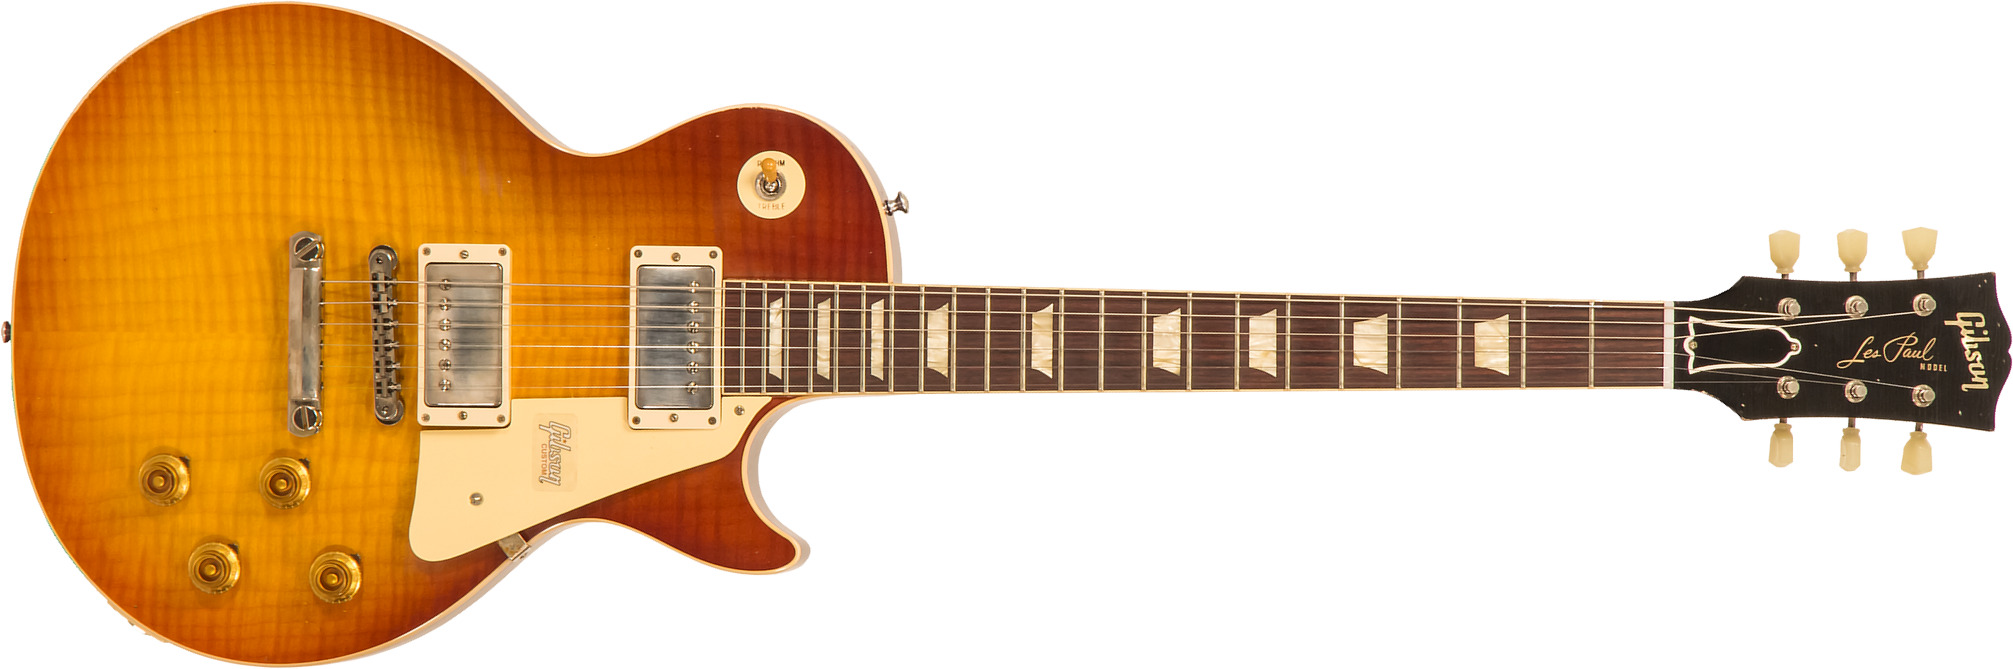 Gibson Custom Shop M2m Les Paul Standard 1959 60th Anniversary 2h Ht Rw #993516 - Vos Royal Teaburst - Single cut electric guitar - Main picture